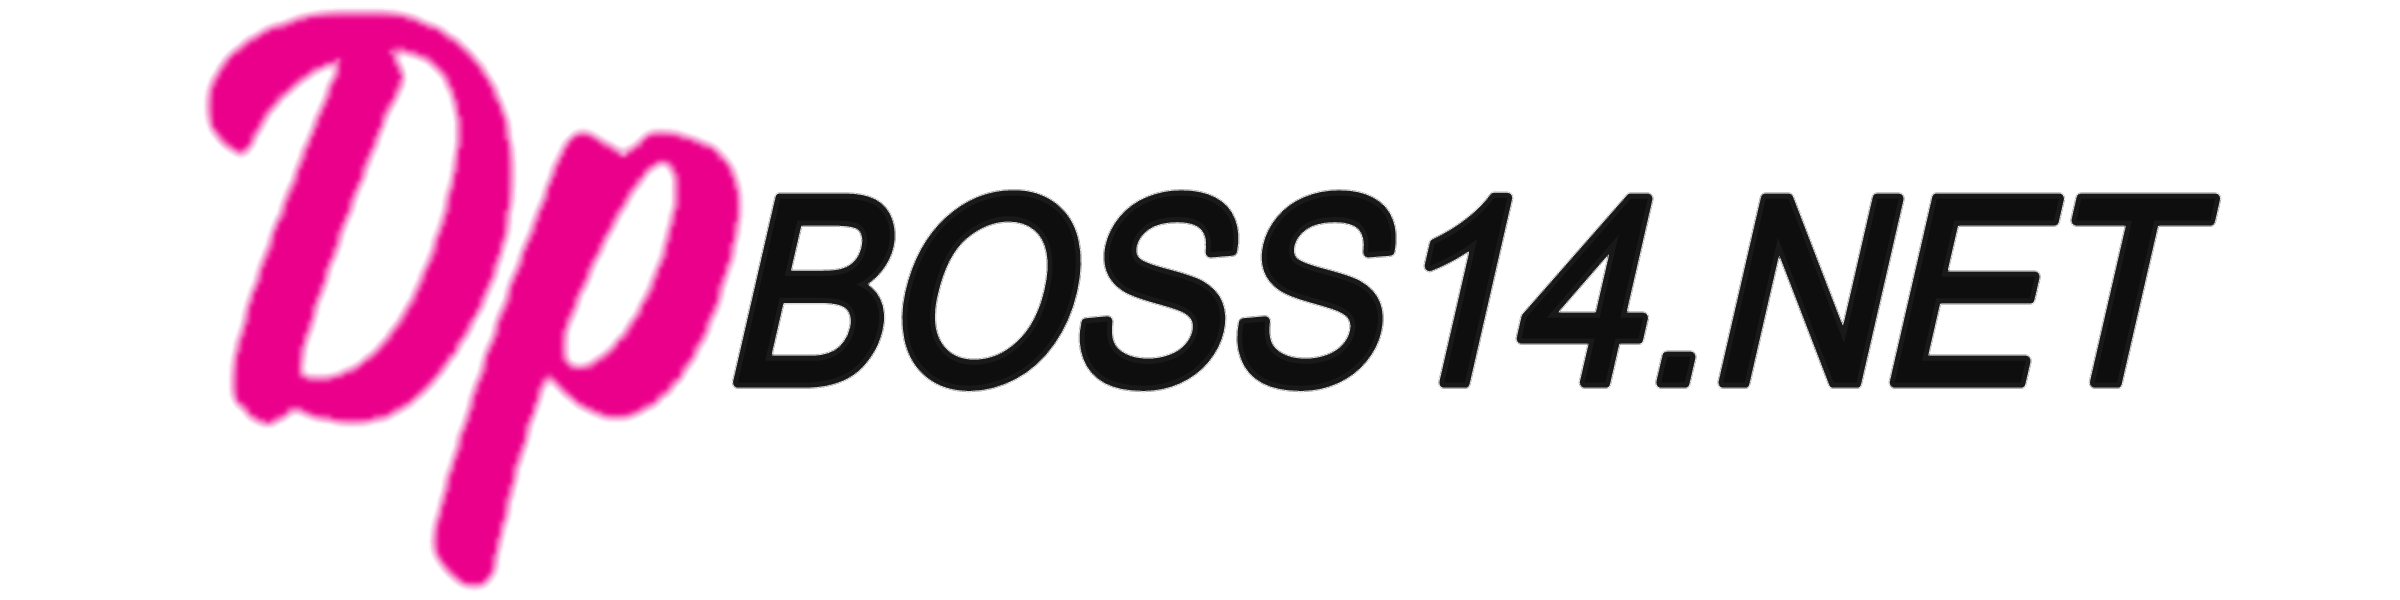 logo of dpboss14.net